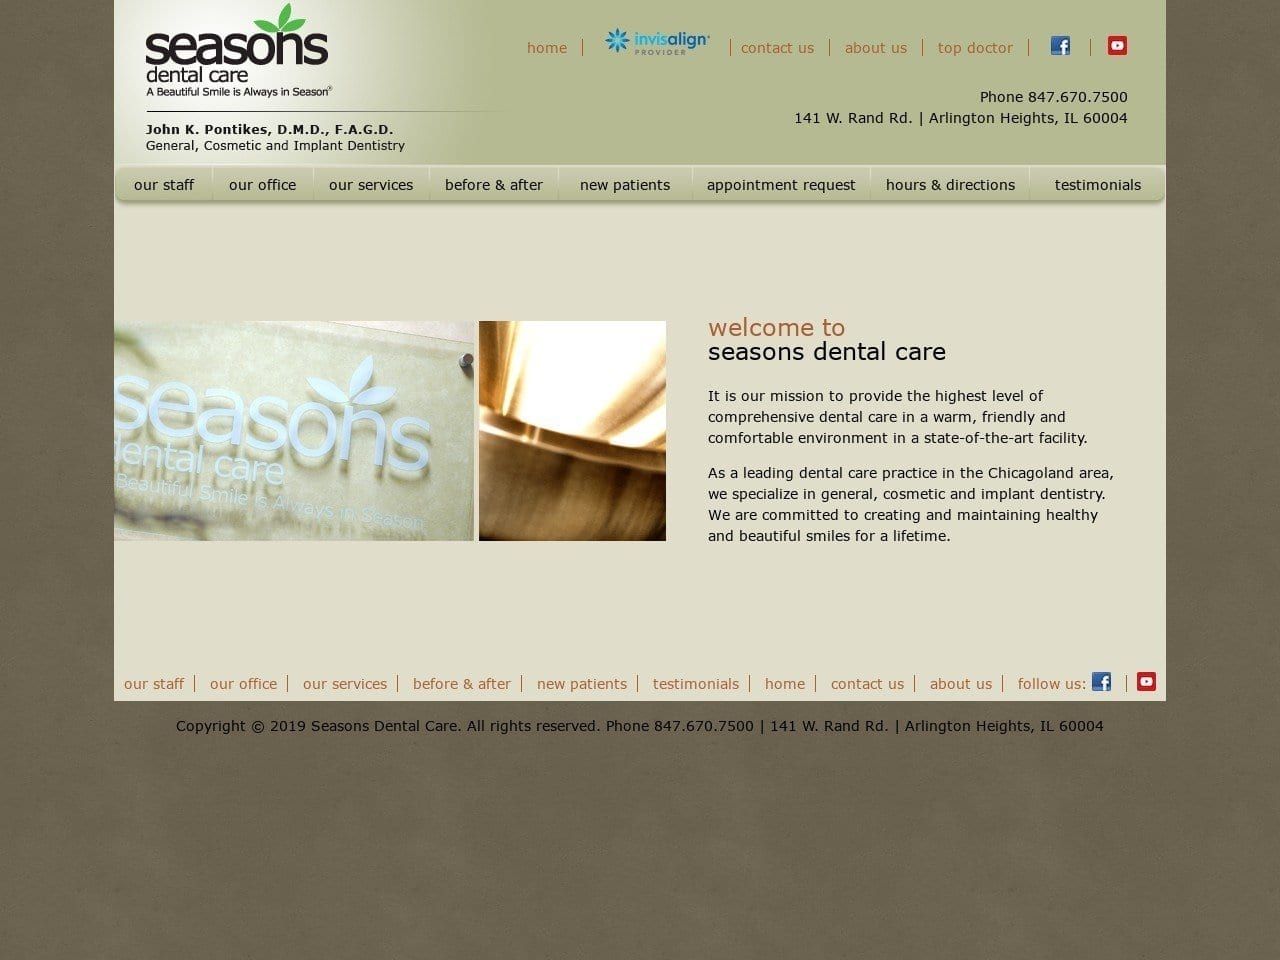 Seasons Dental Care Website Screenshot from seasonsdentalcare.com